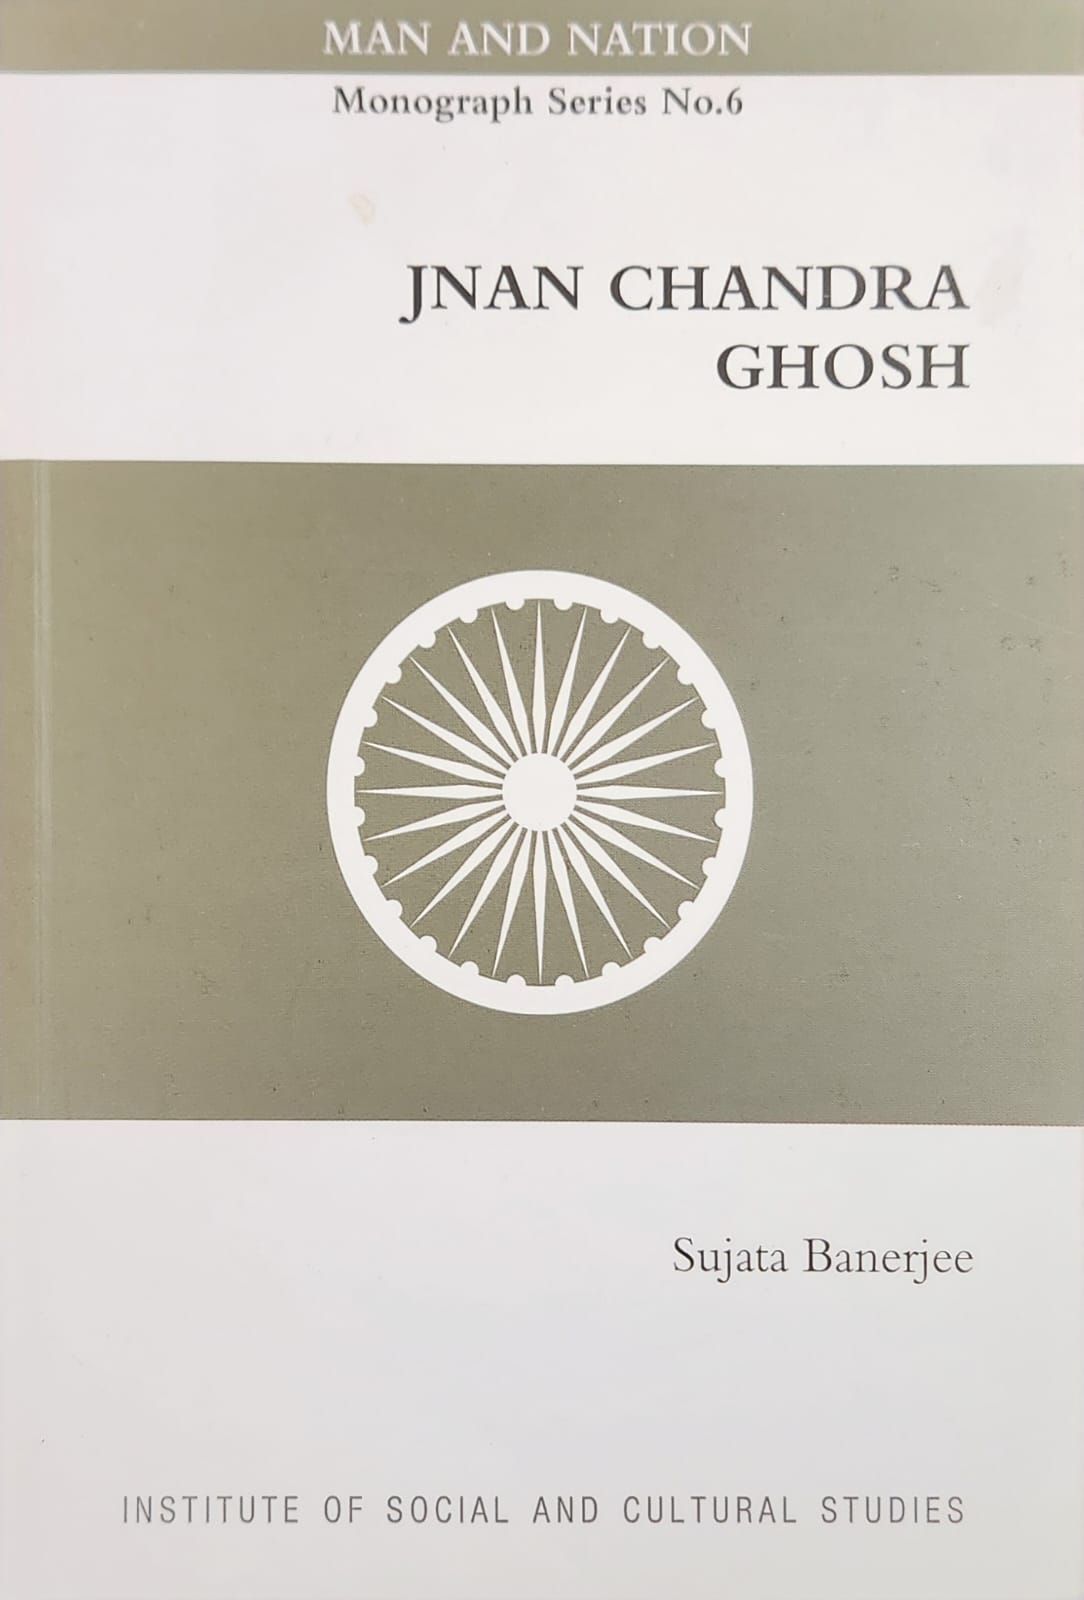 Jnan Chandra Ghosh